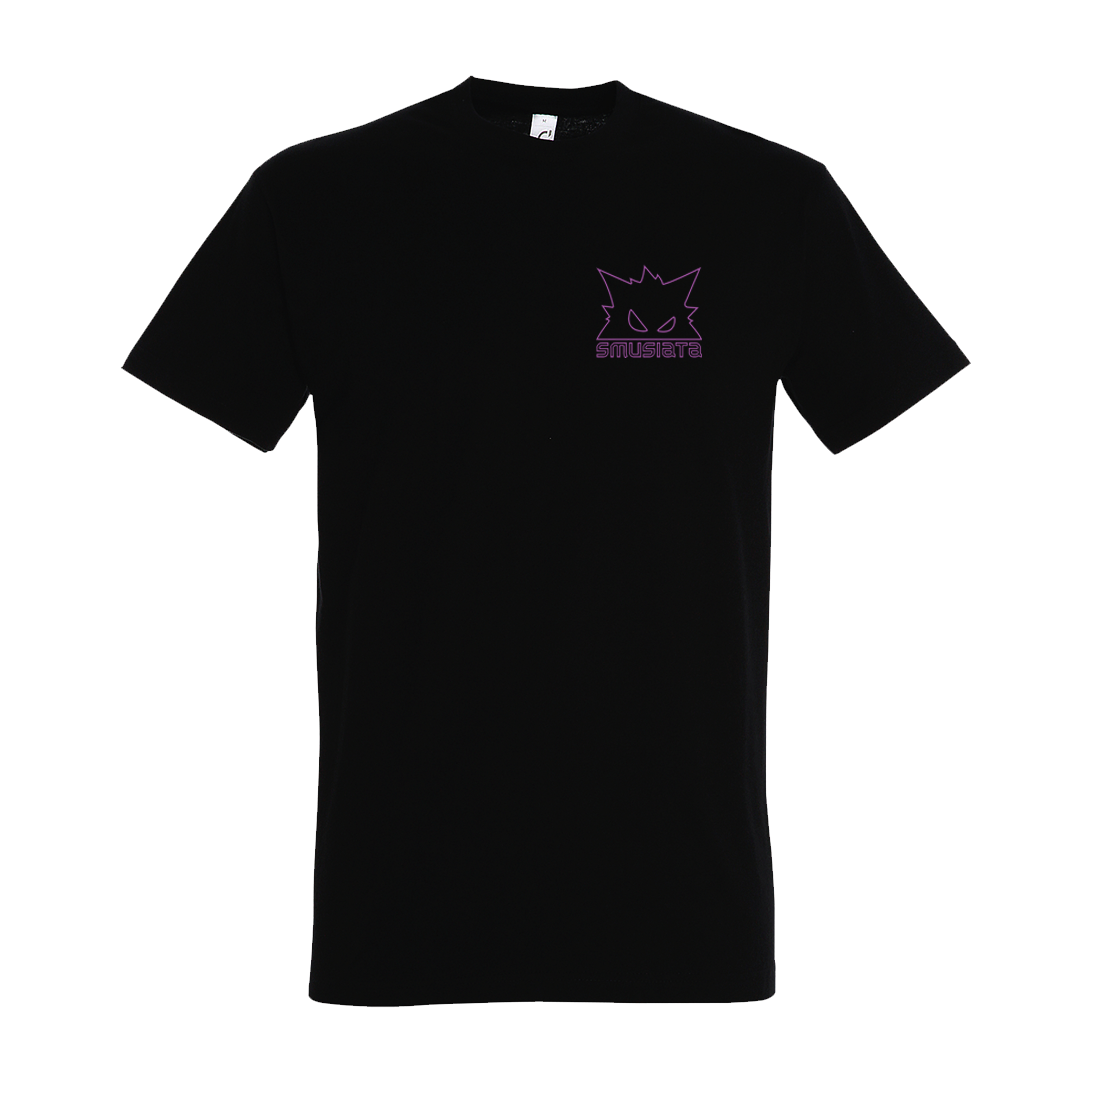 Smusiata tričko Smusiata Purple Čierna XL